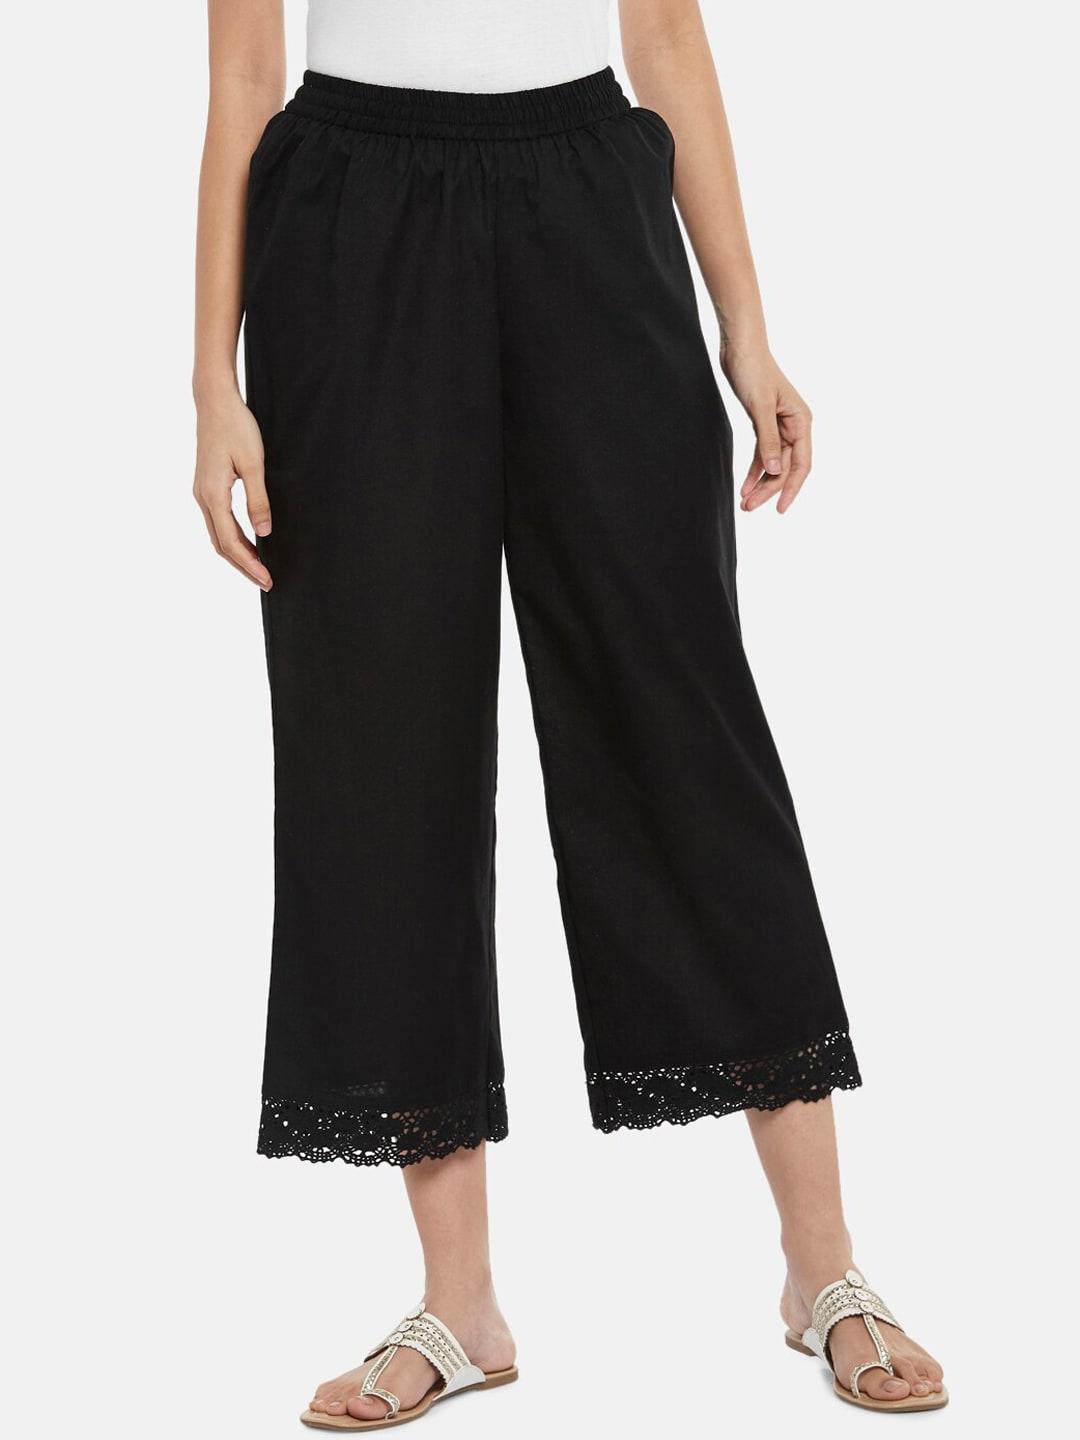 rangmanch by pantaloons women black culottes trousers